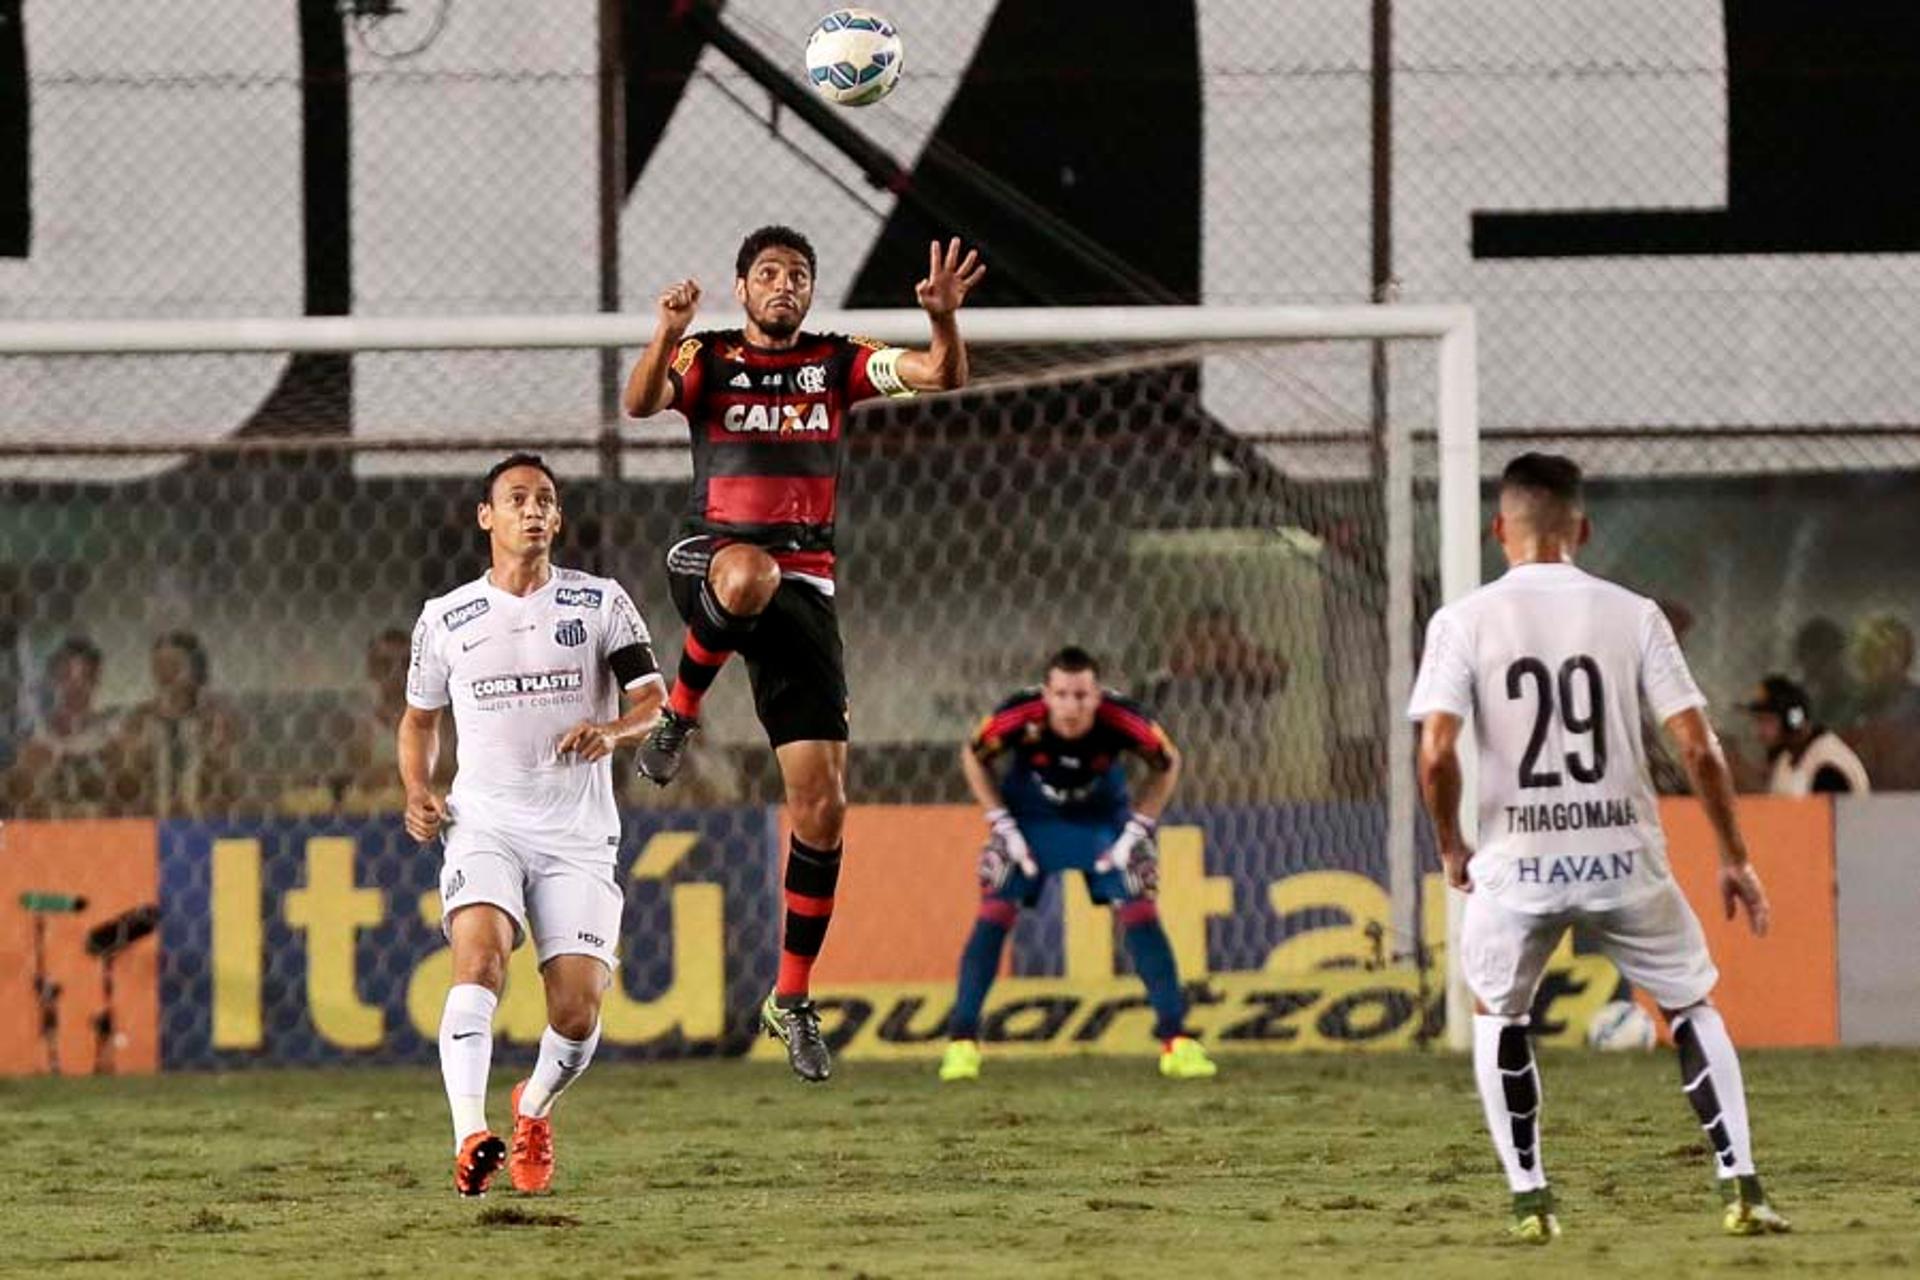 Último confronto - 19/11 - Santos 0 x 0 Flamengo - Vila Belmiro